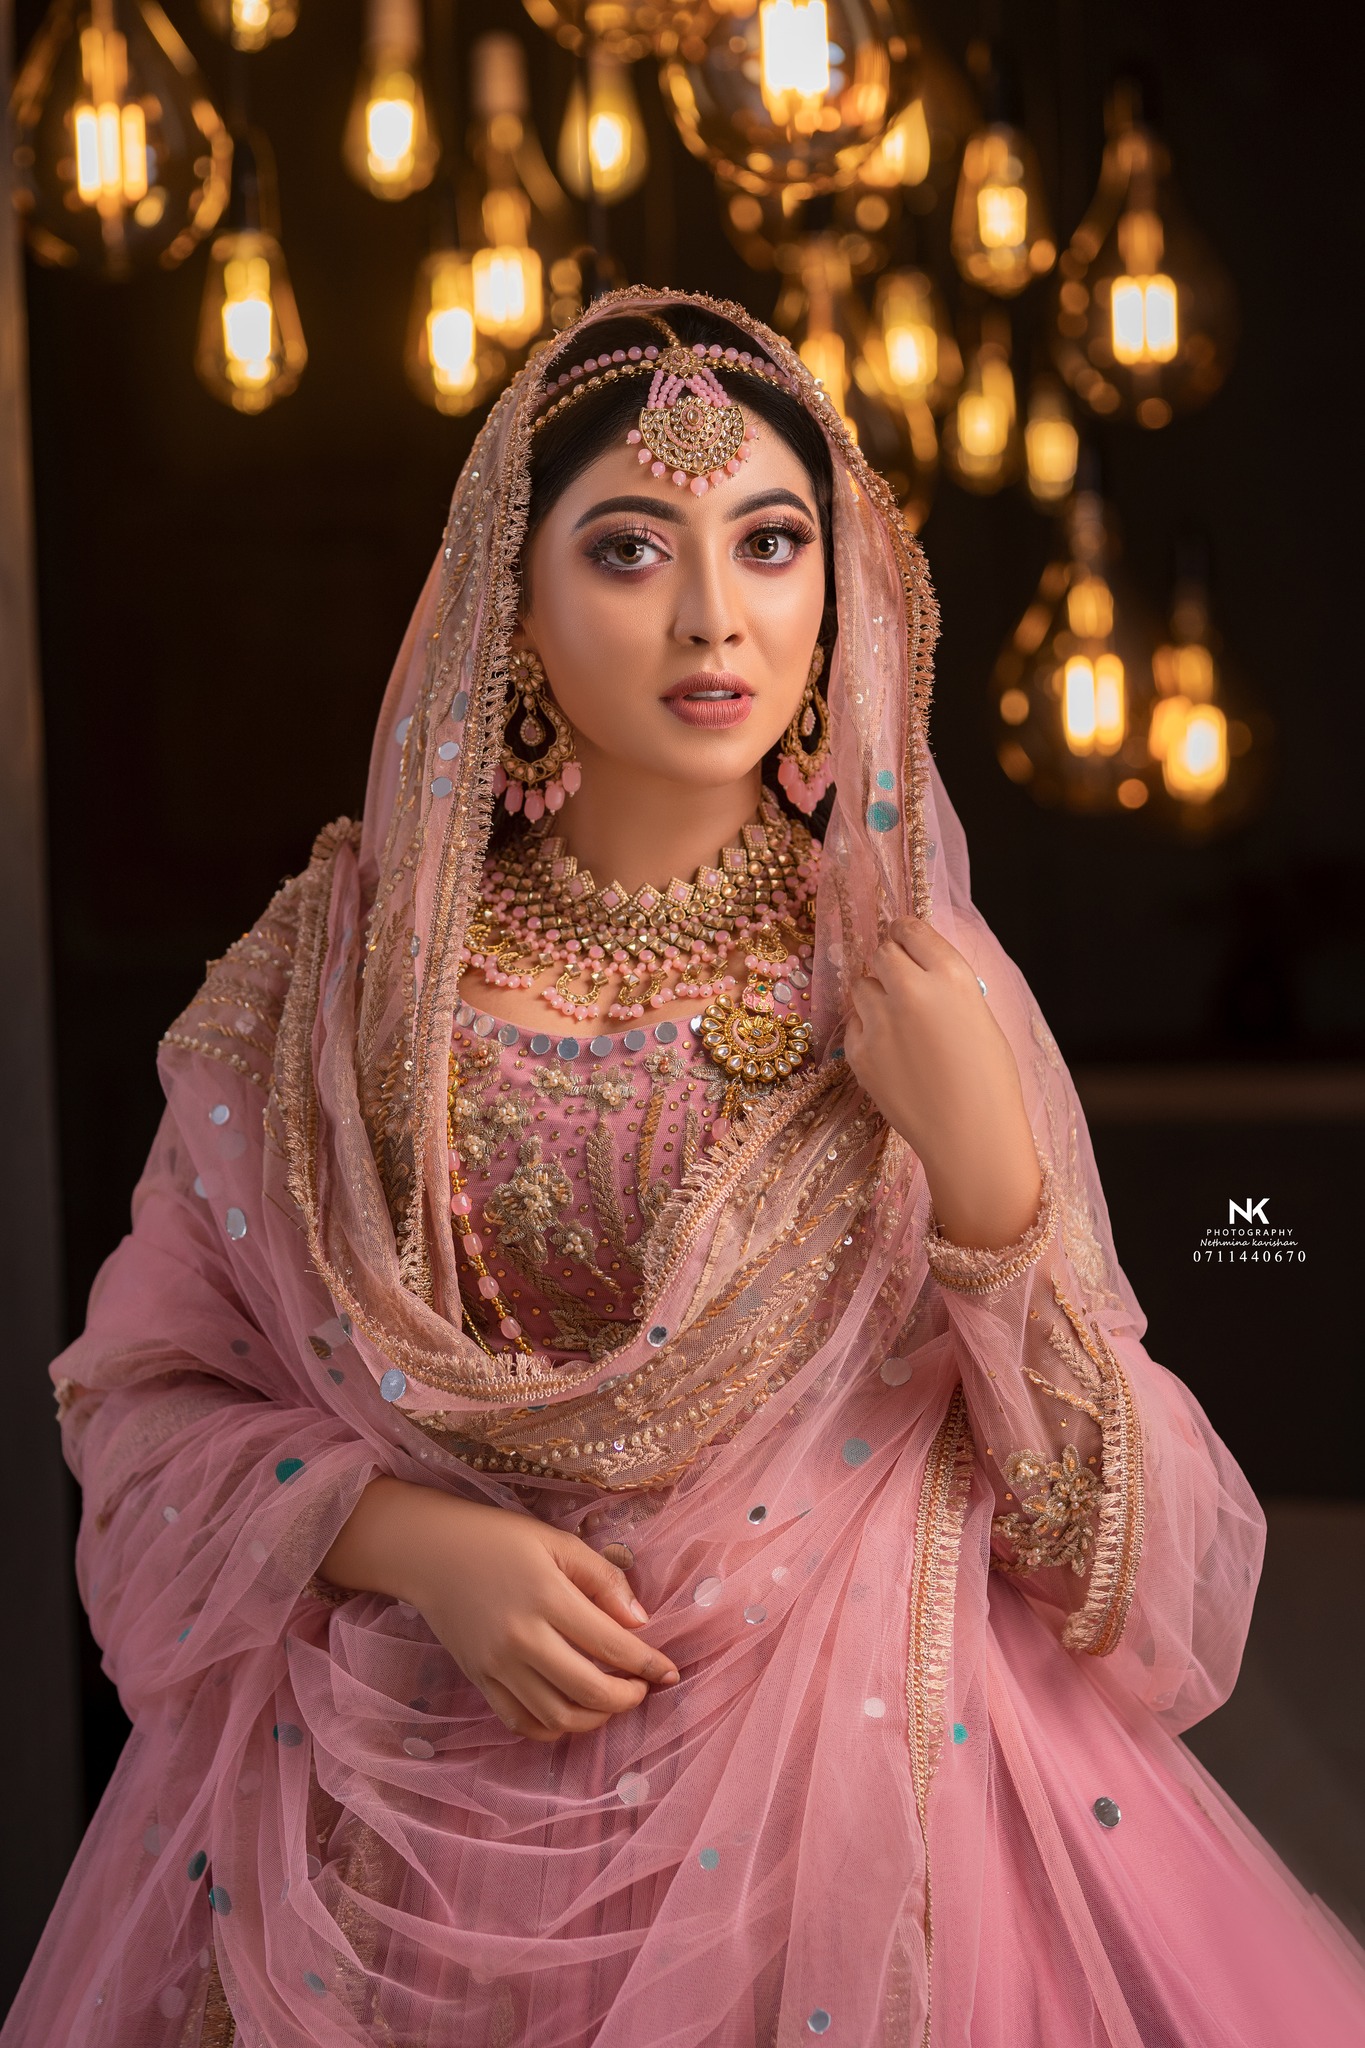 Sri Lankan Actress, Model Ishanka Abeysekara Indian Style bridal Photoshoot. Ishanka Abeysekara Biography, Instagram. Ishanka Abeysekara Hot Videos, Indian Style Brides, Asian Bridal